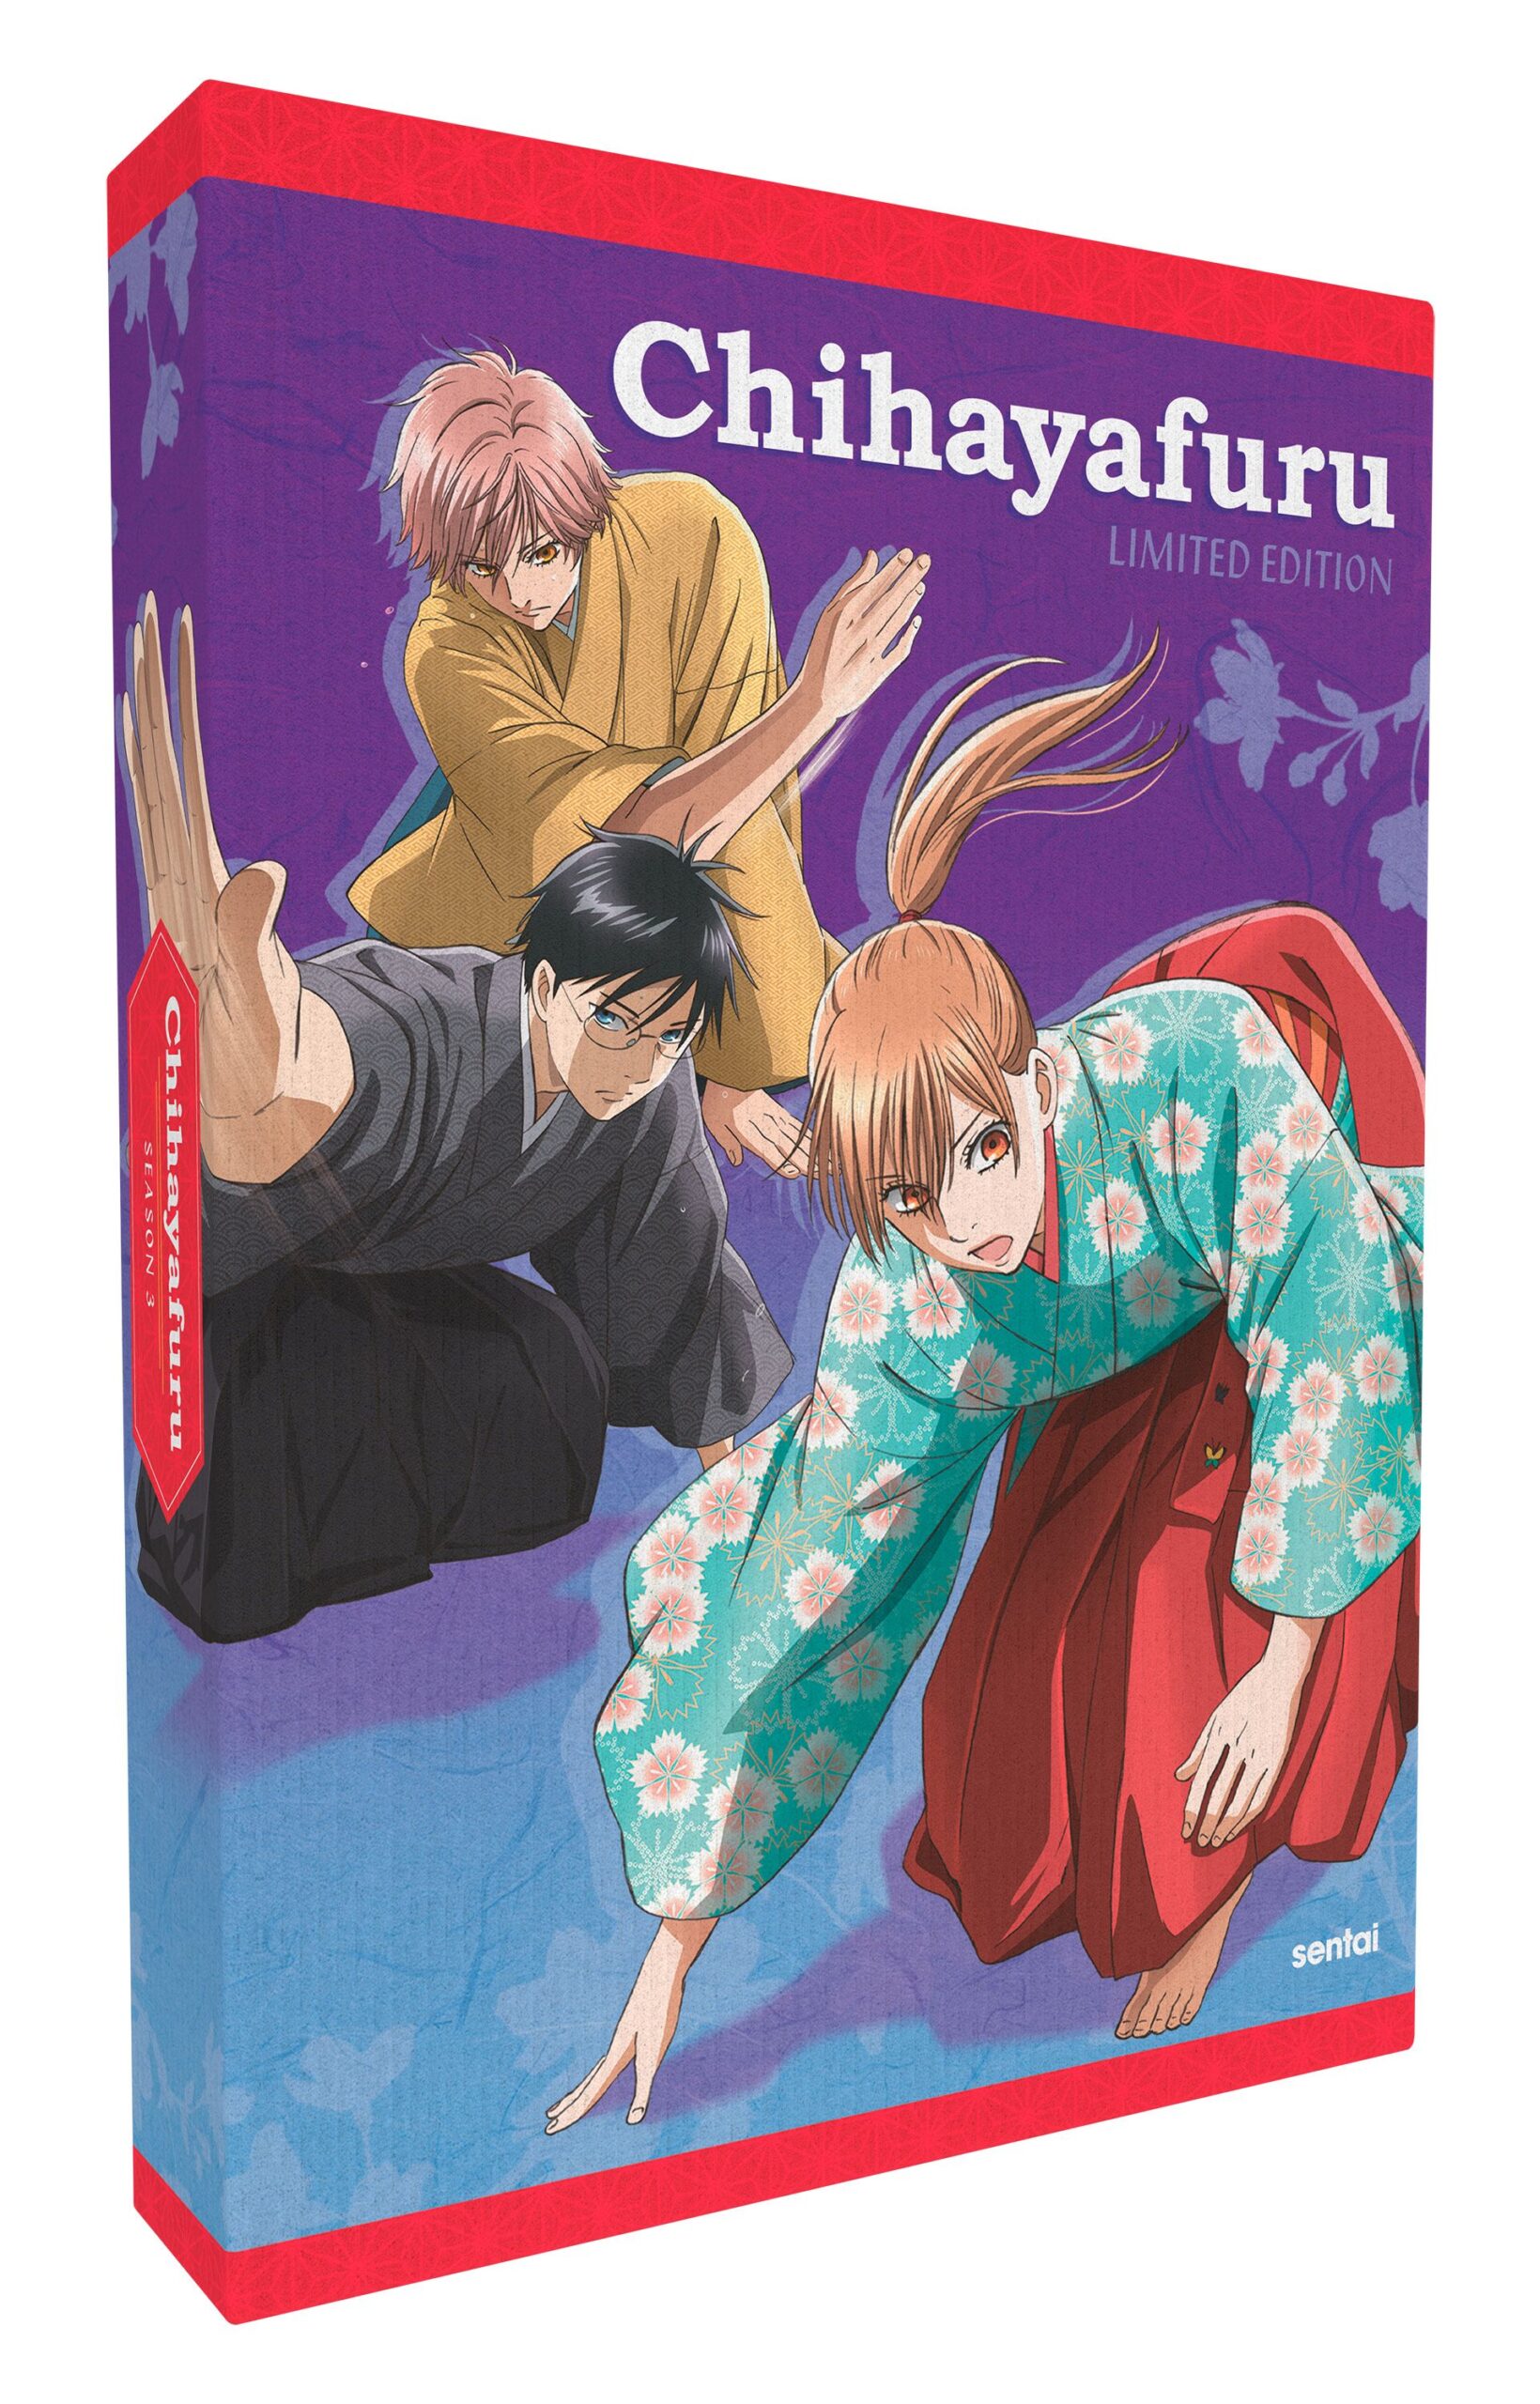 Chihayafuru Season 3 Blu-ray. Cover art provided by Sentai.